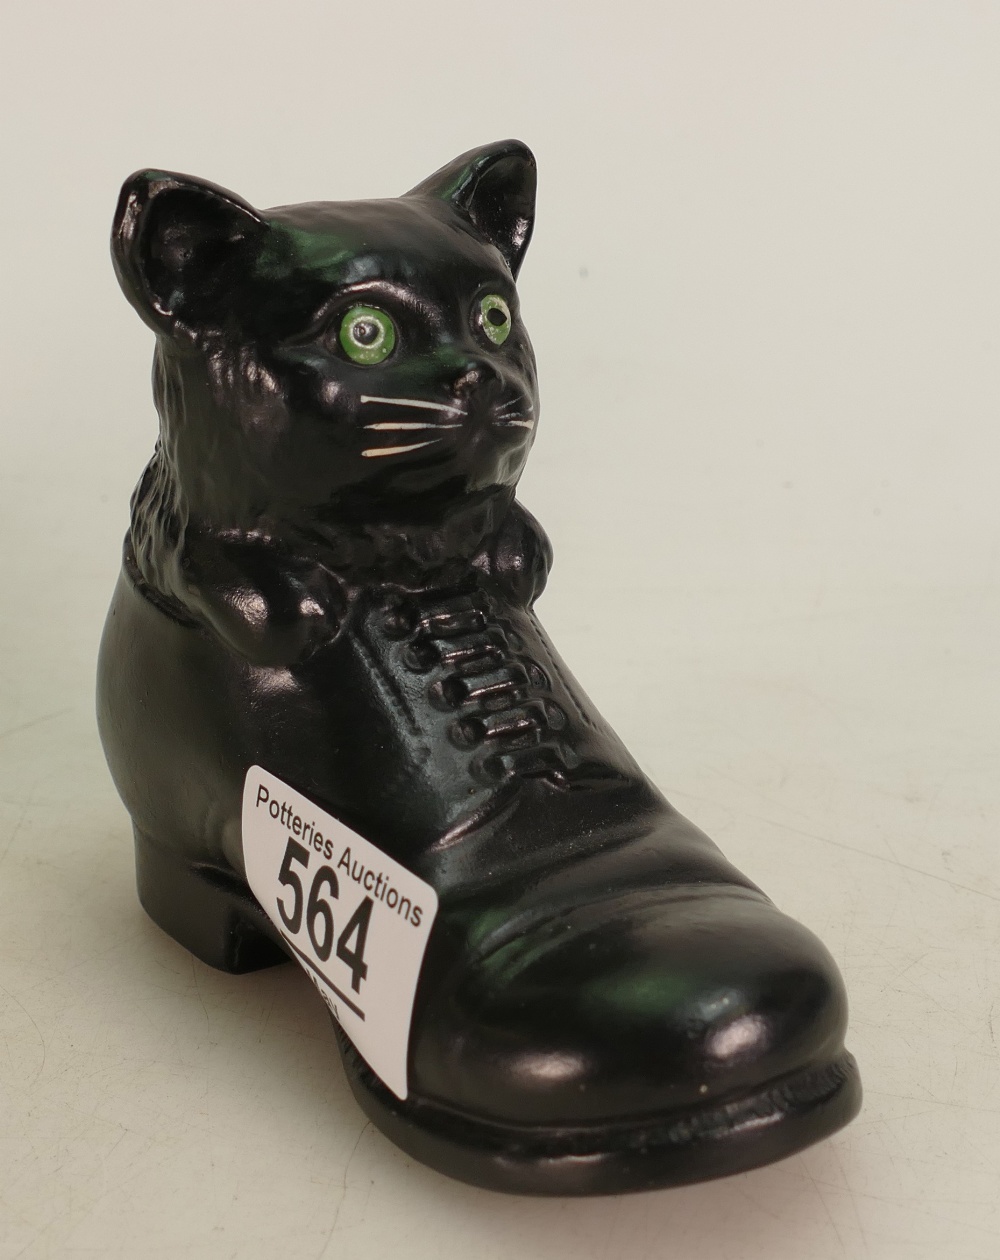 Sylvac Black Art Deco Cat figure 992,